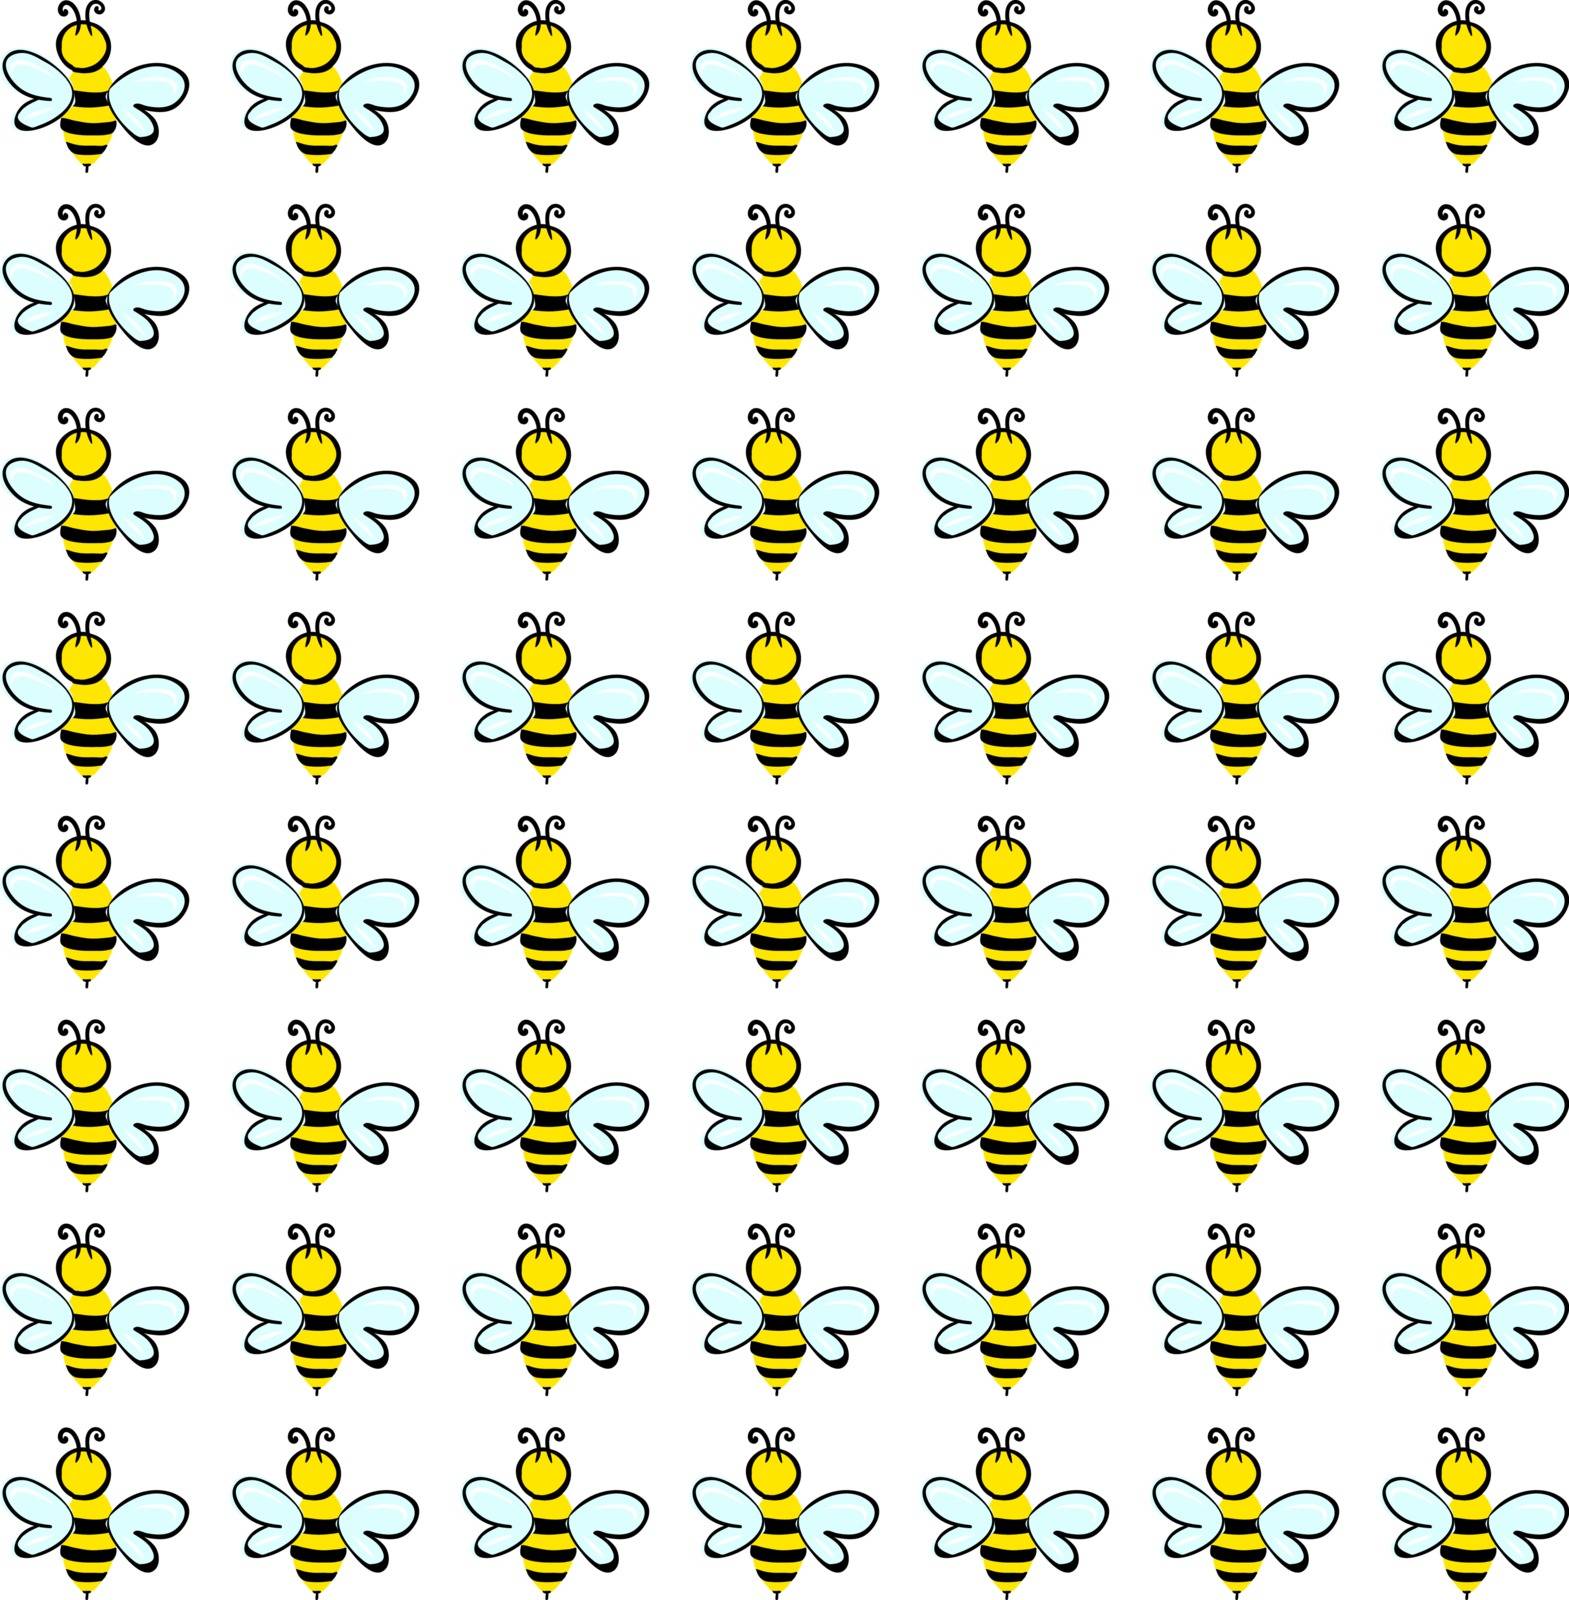 Bee wallpaper, illustration, vector on white background.